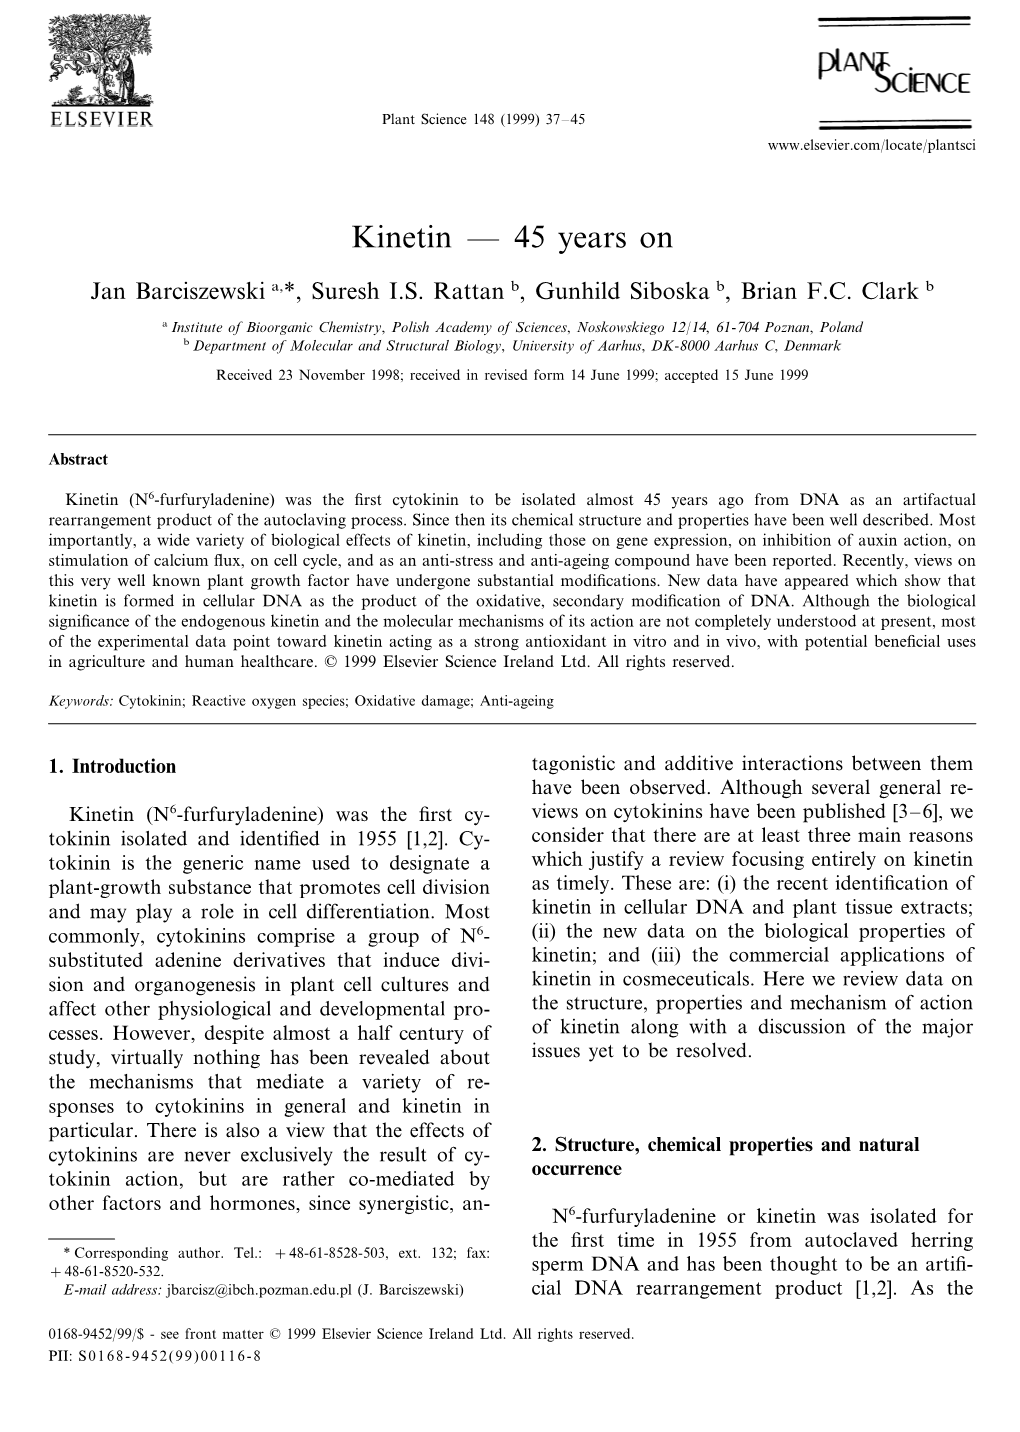 Kinetin — 45 Years On